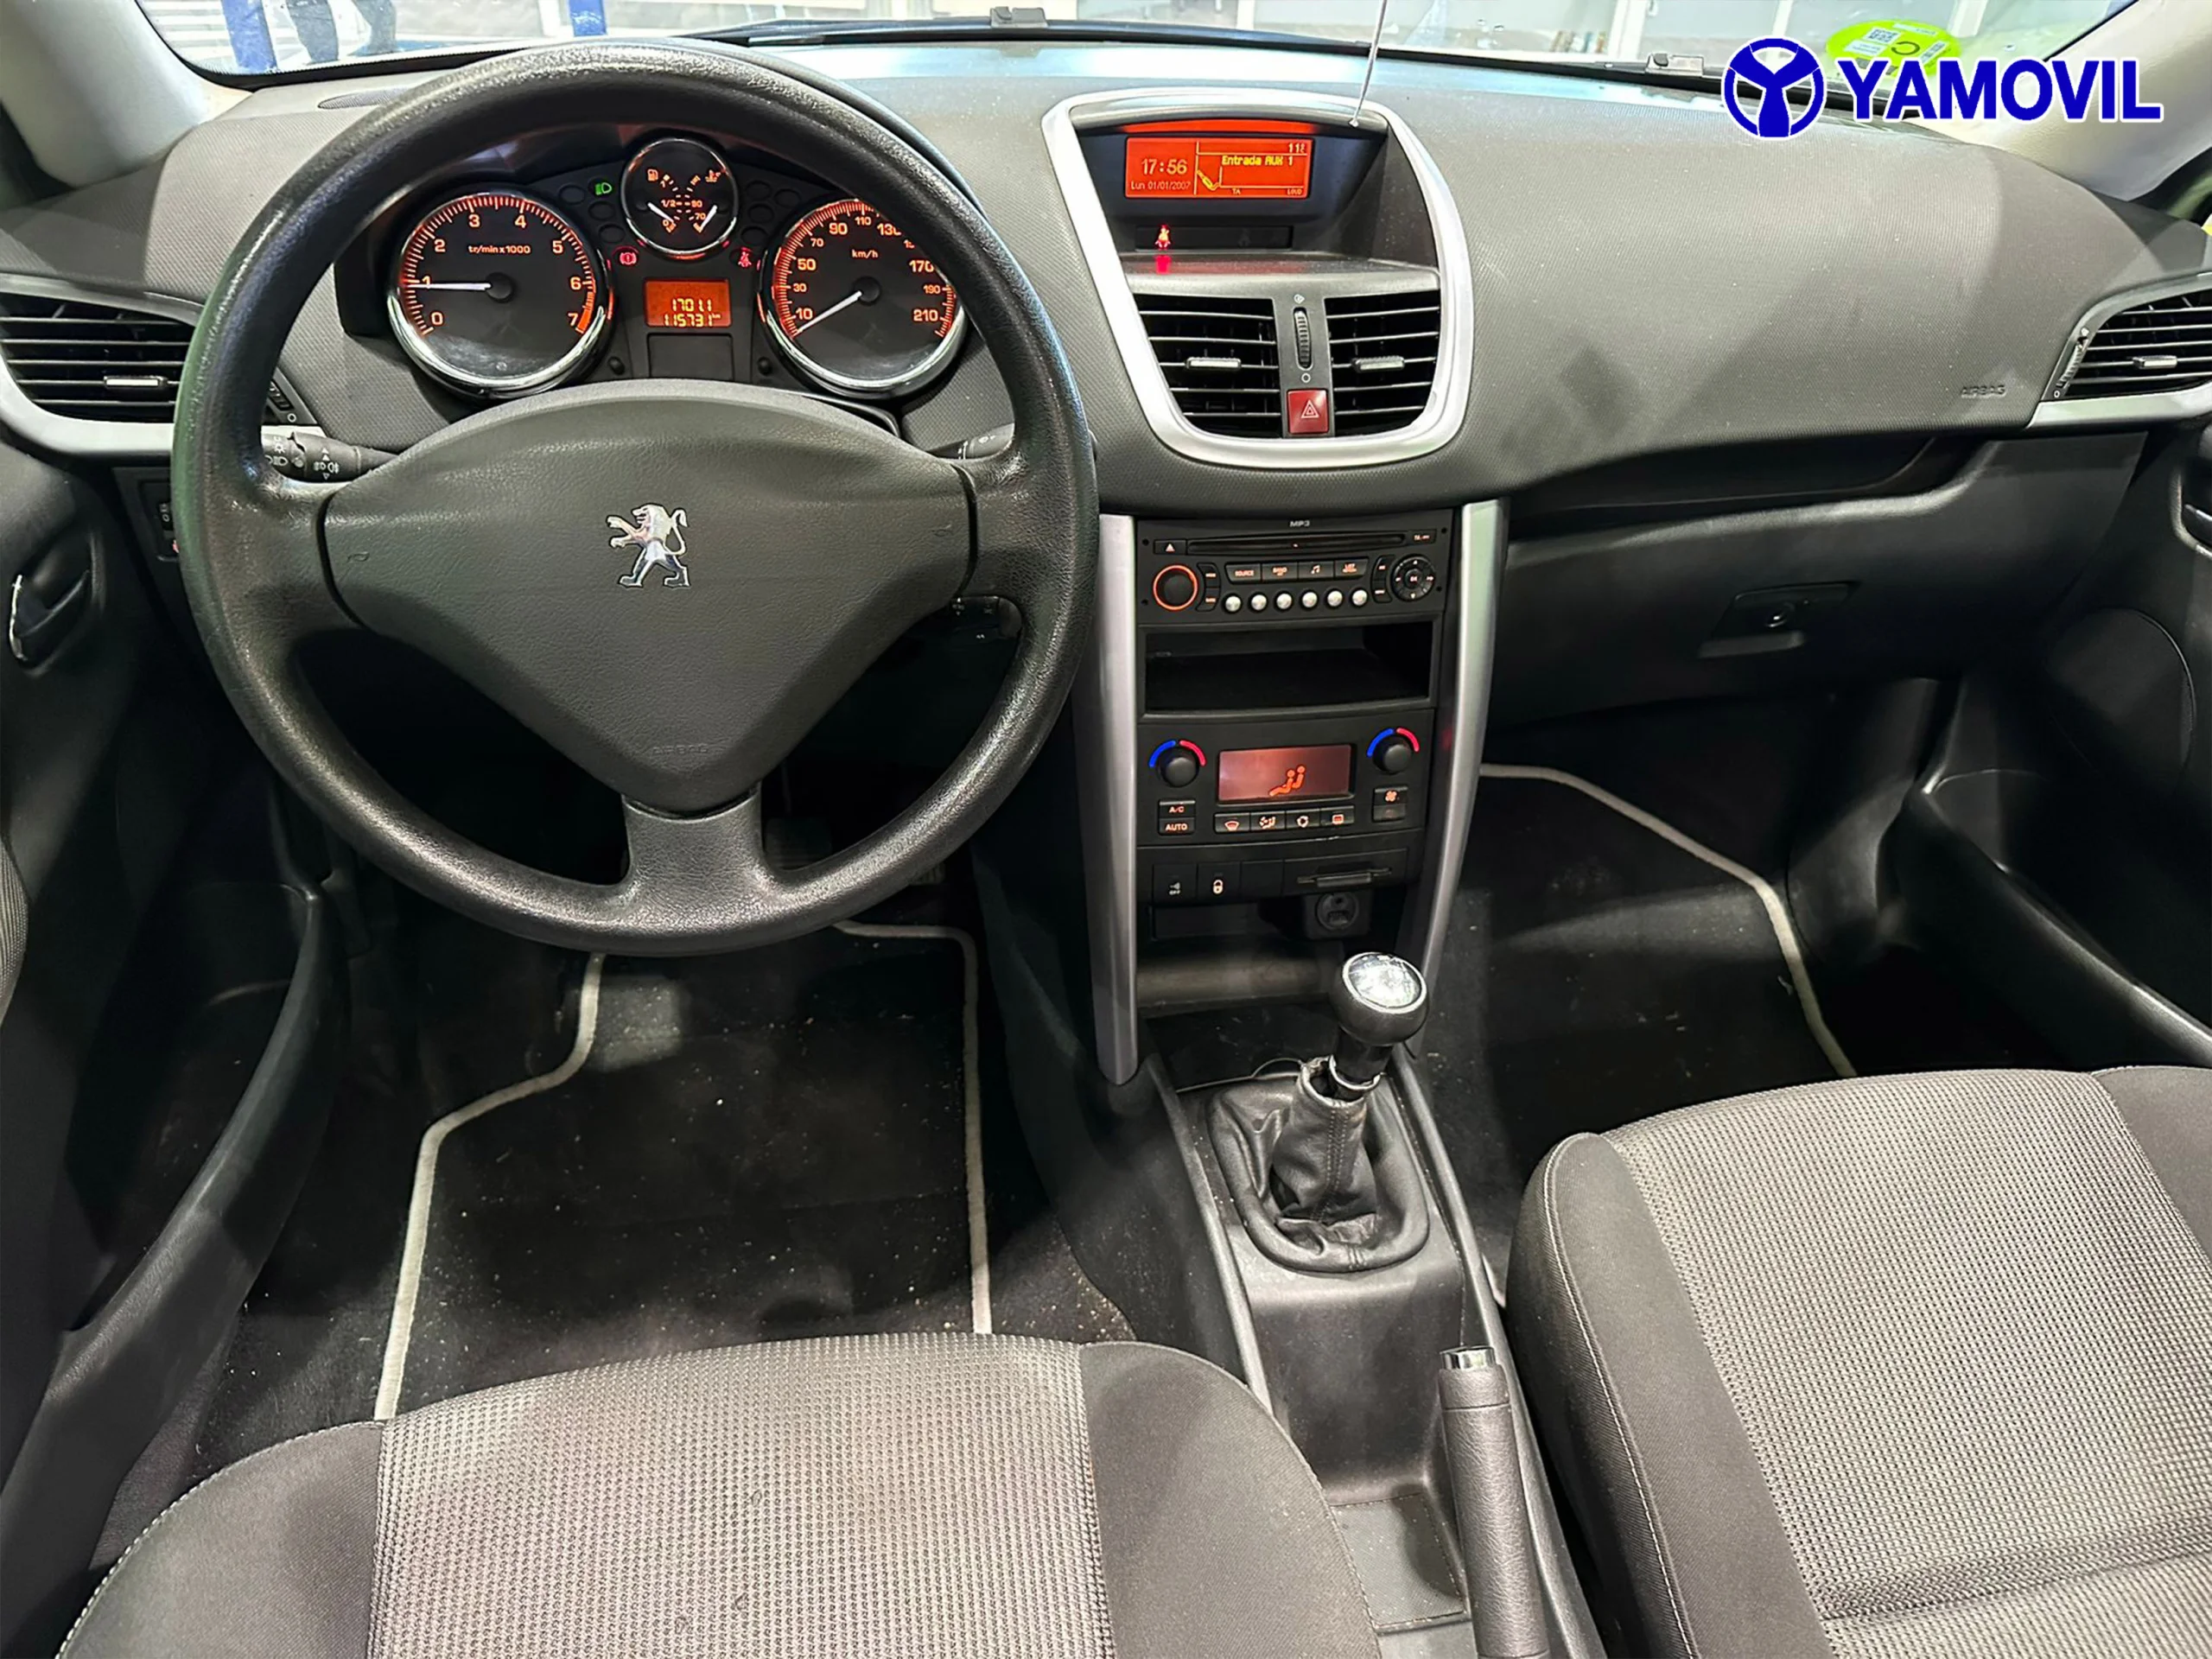 Peugeot 207 CC 1.6 VTi 88 kW (120 CV) - Foto 3